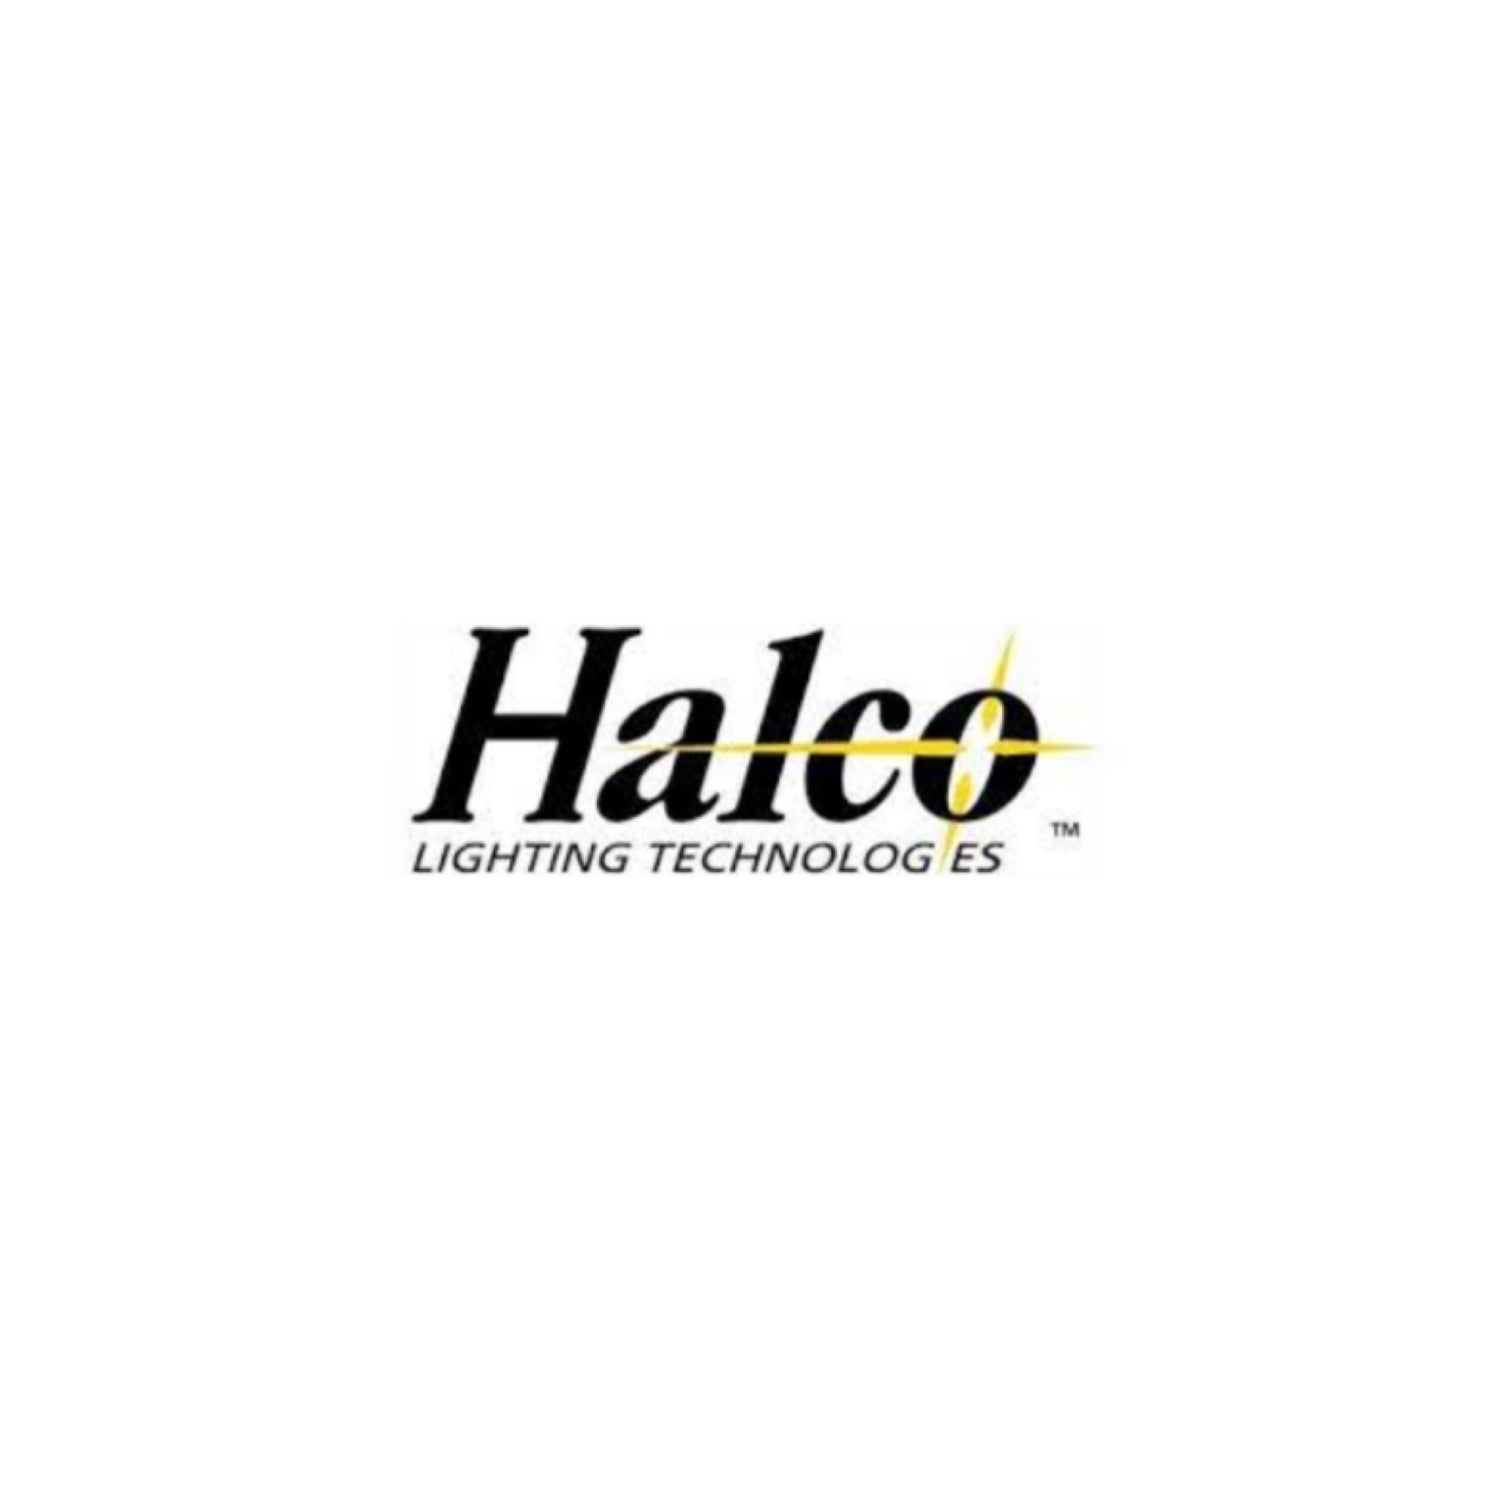 HALCO LIGHTING TECHNOLOGIES